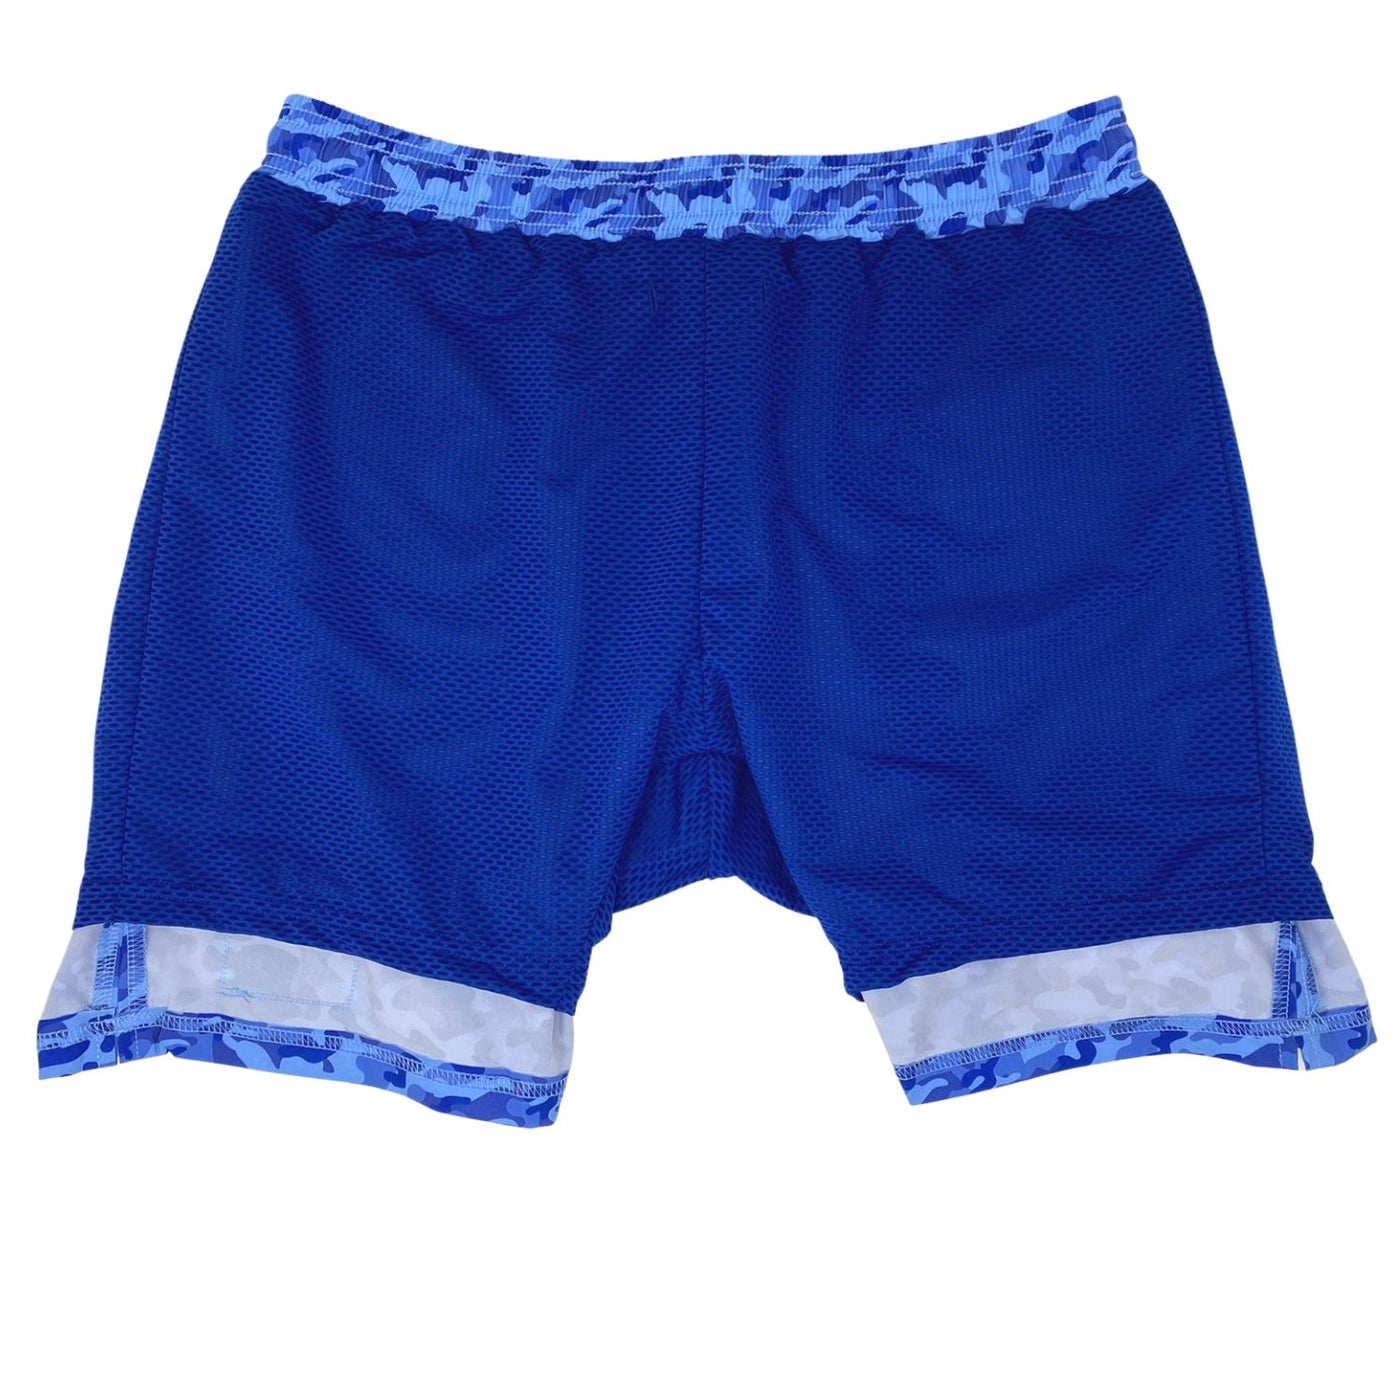 Blue Camo Swimsuit Shorts